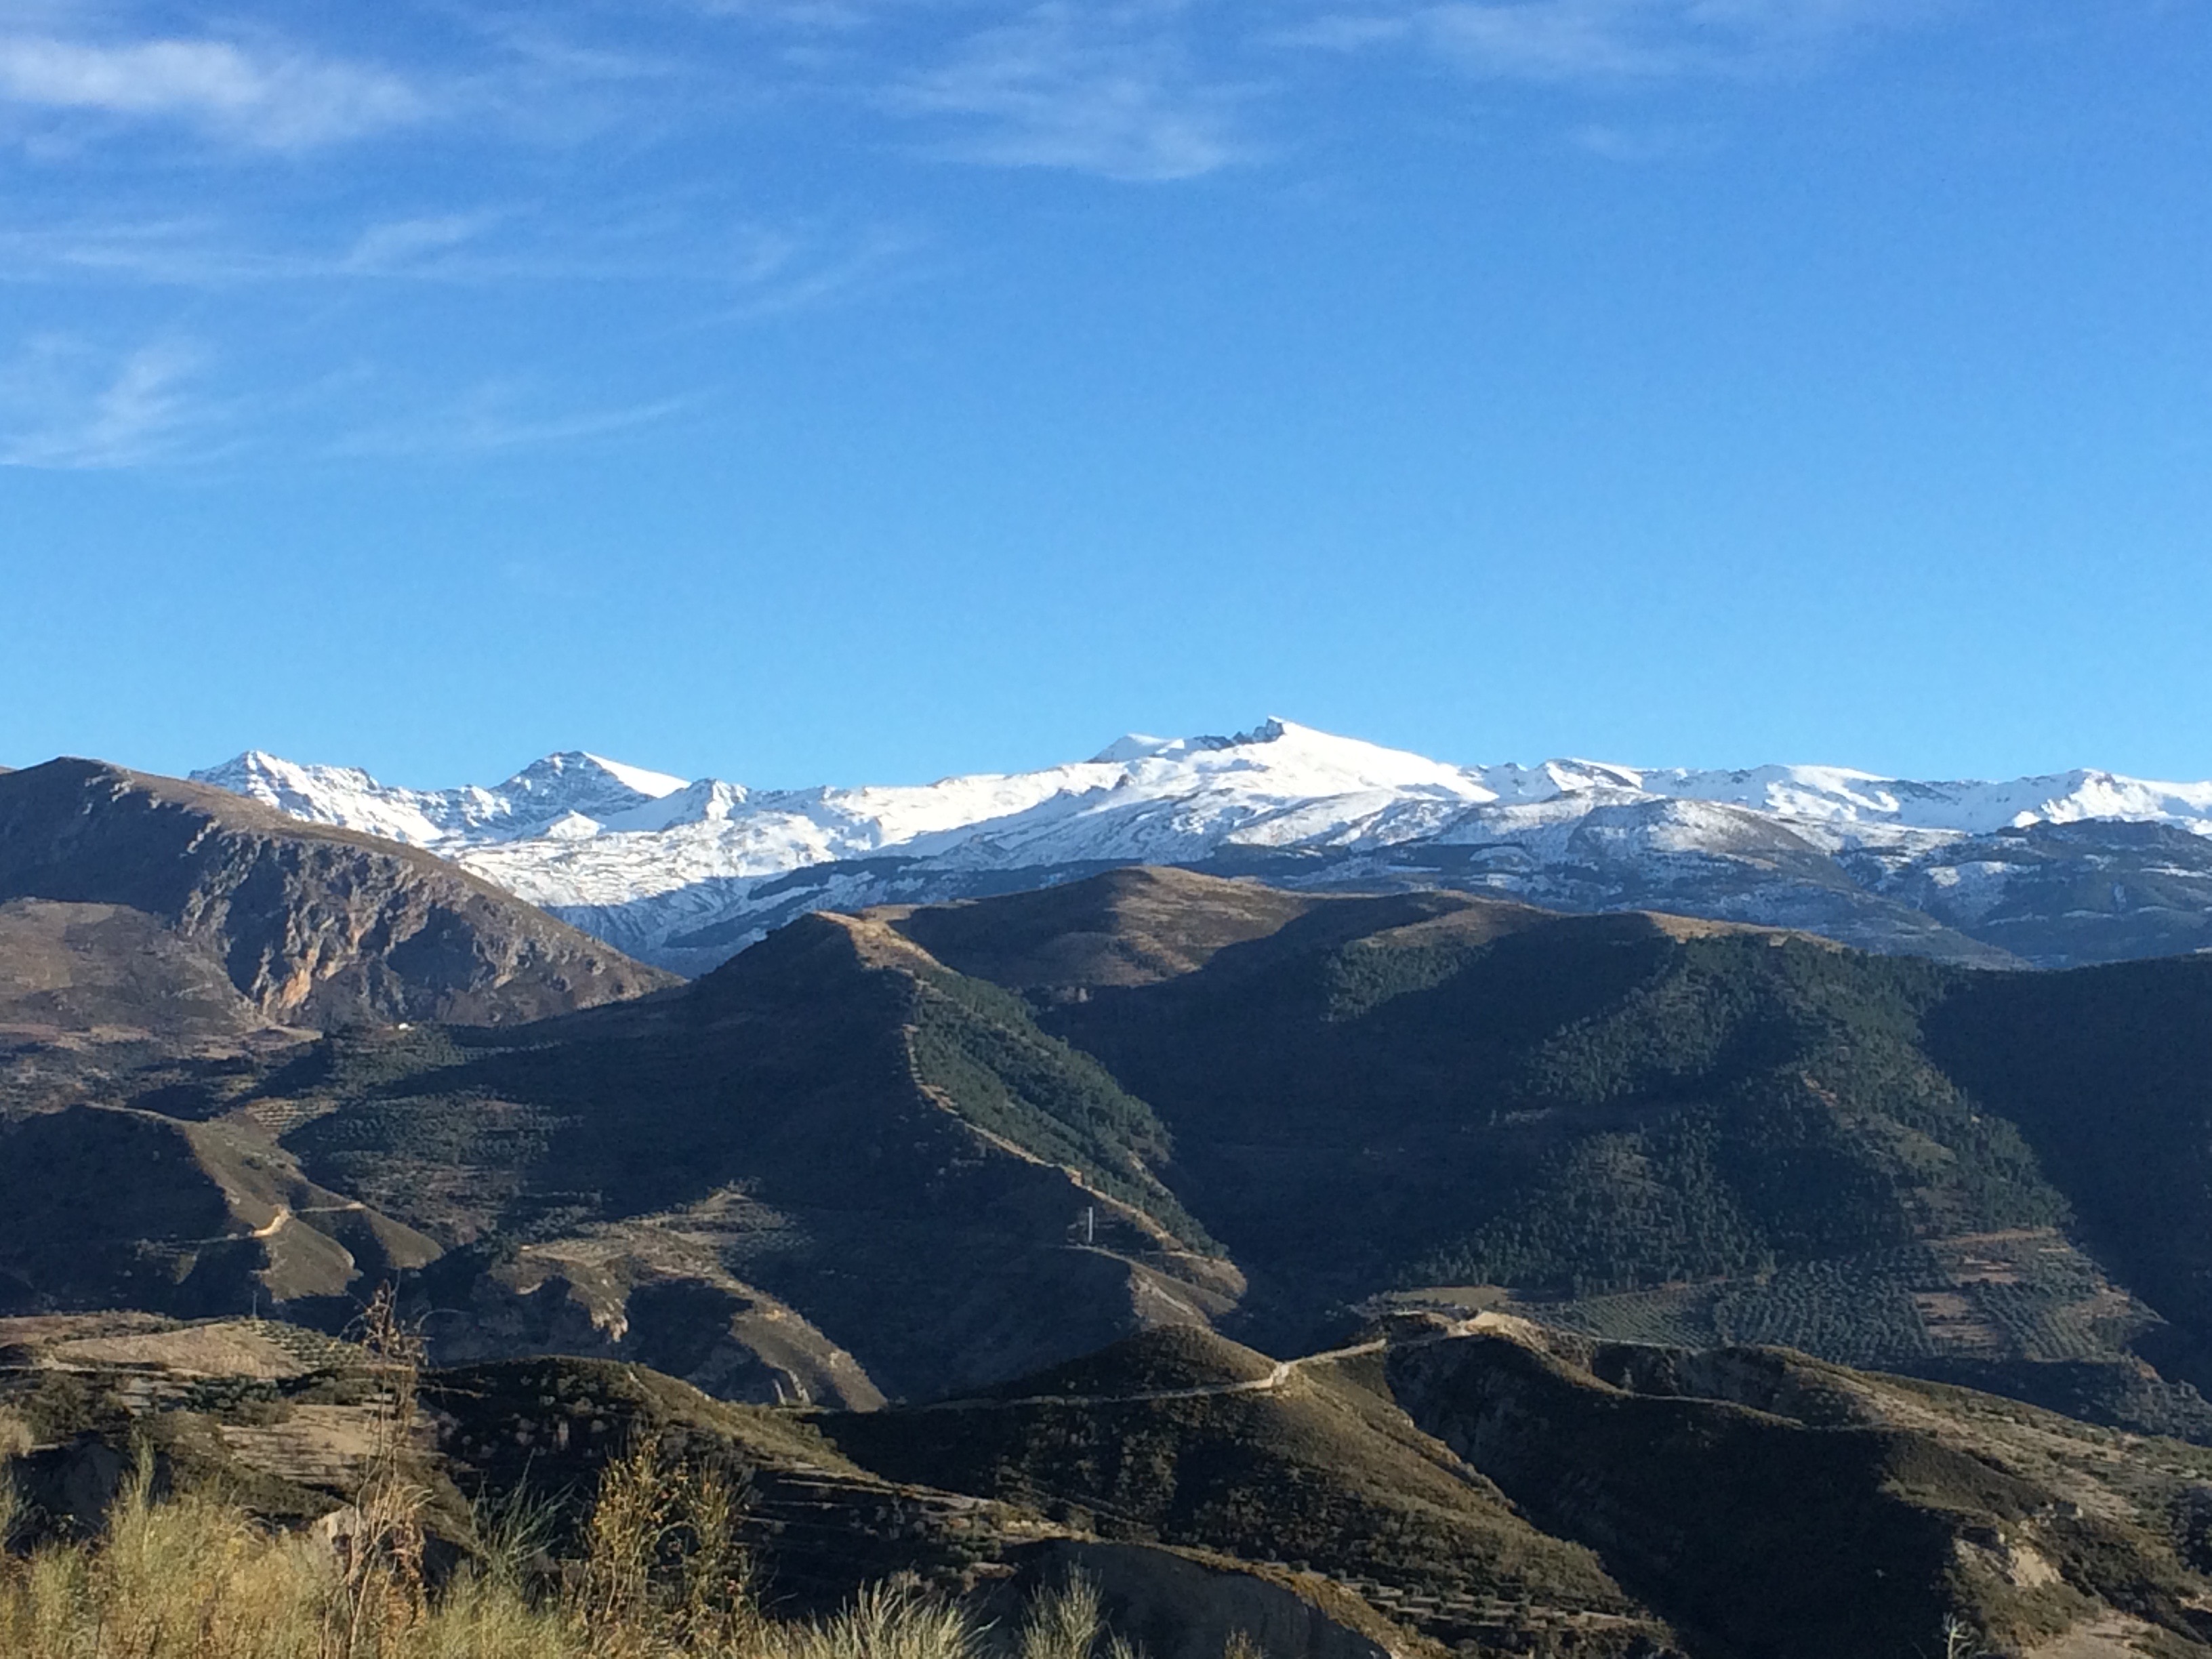 Beas de Granada - Sierra Nevada mountains